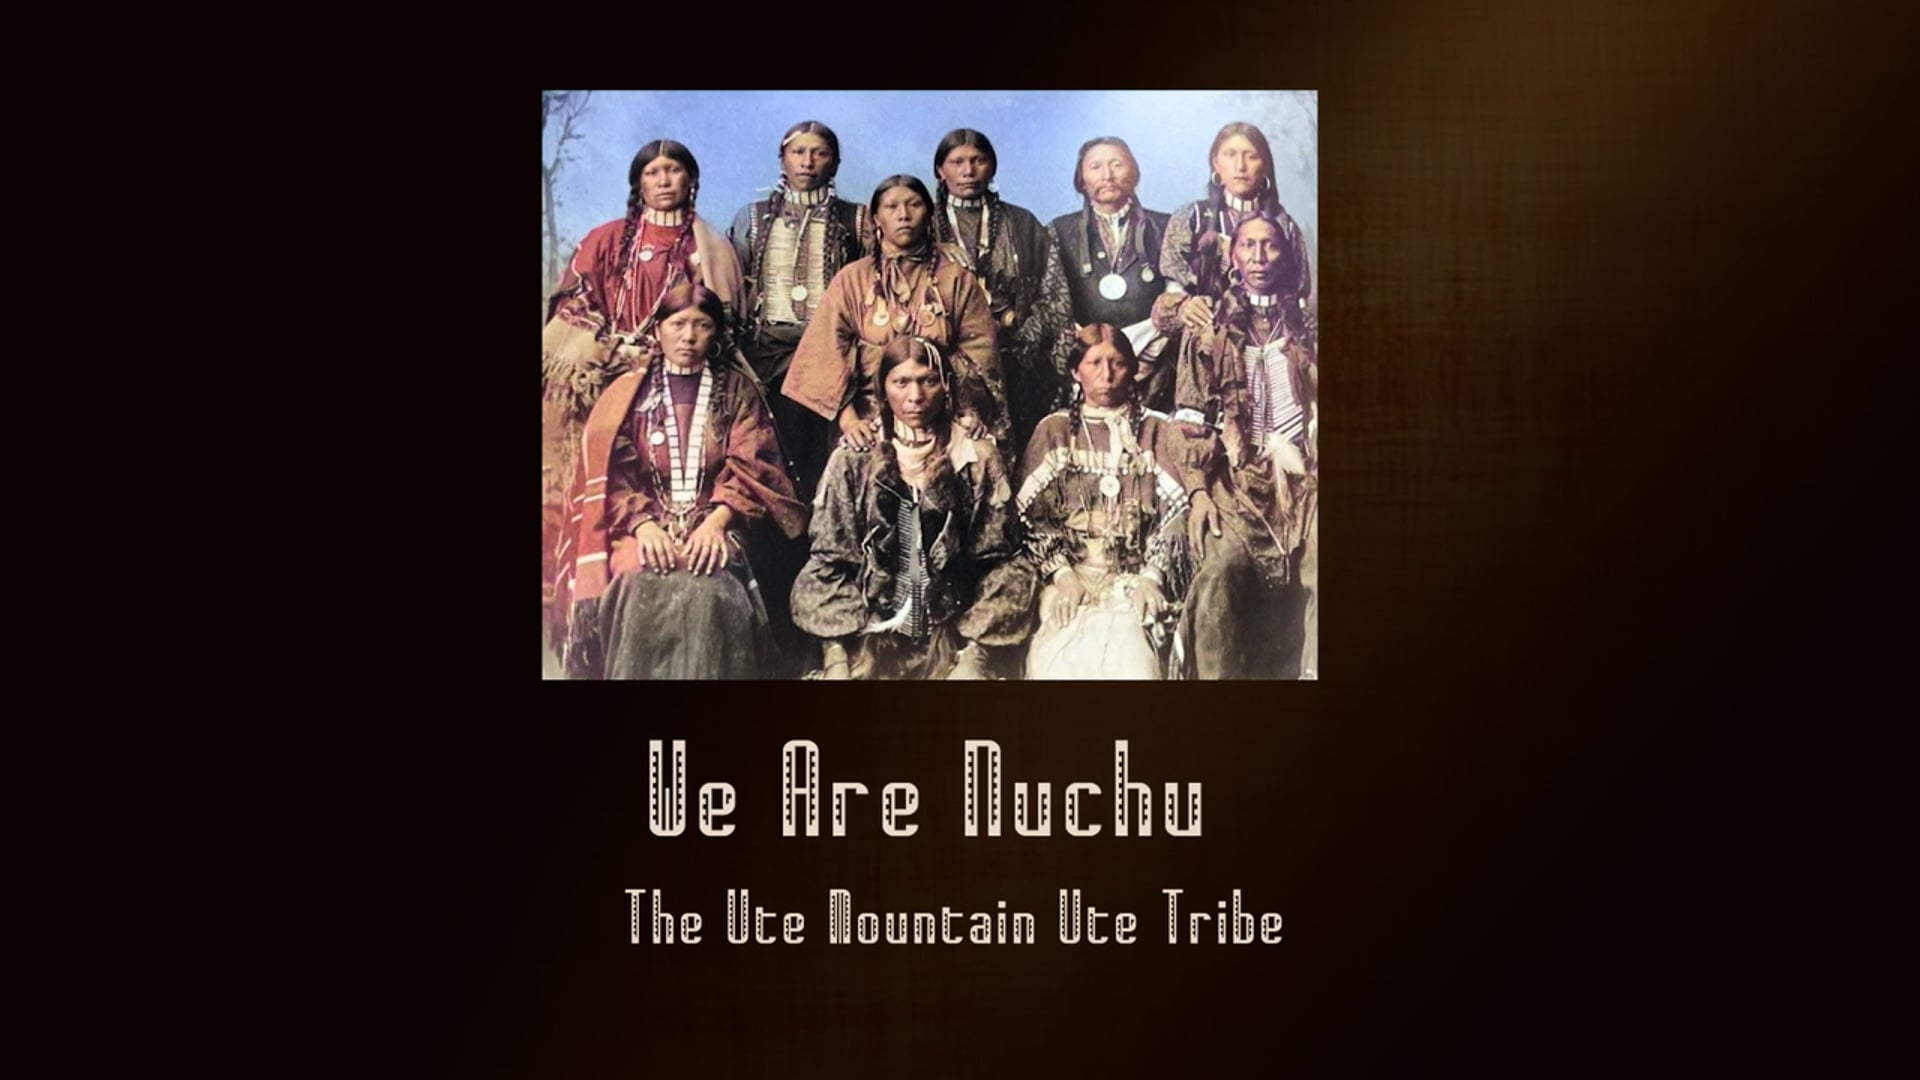 We Are Nuchu - The Ute Mountain Ute Tribe